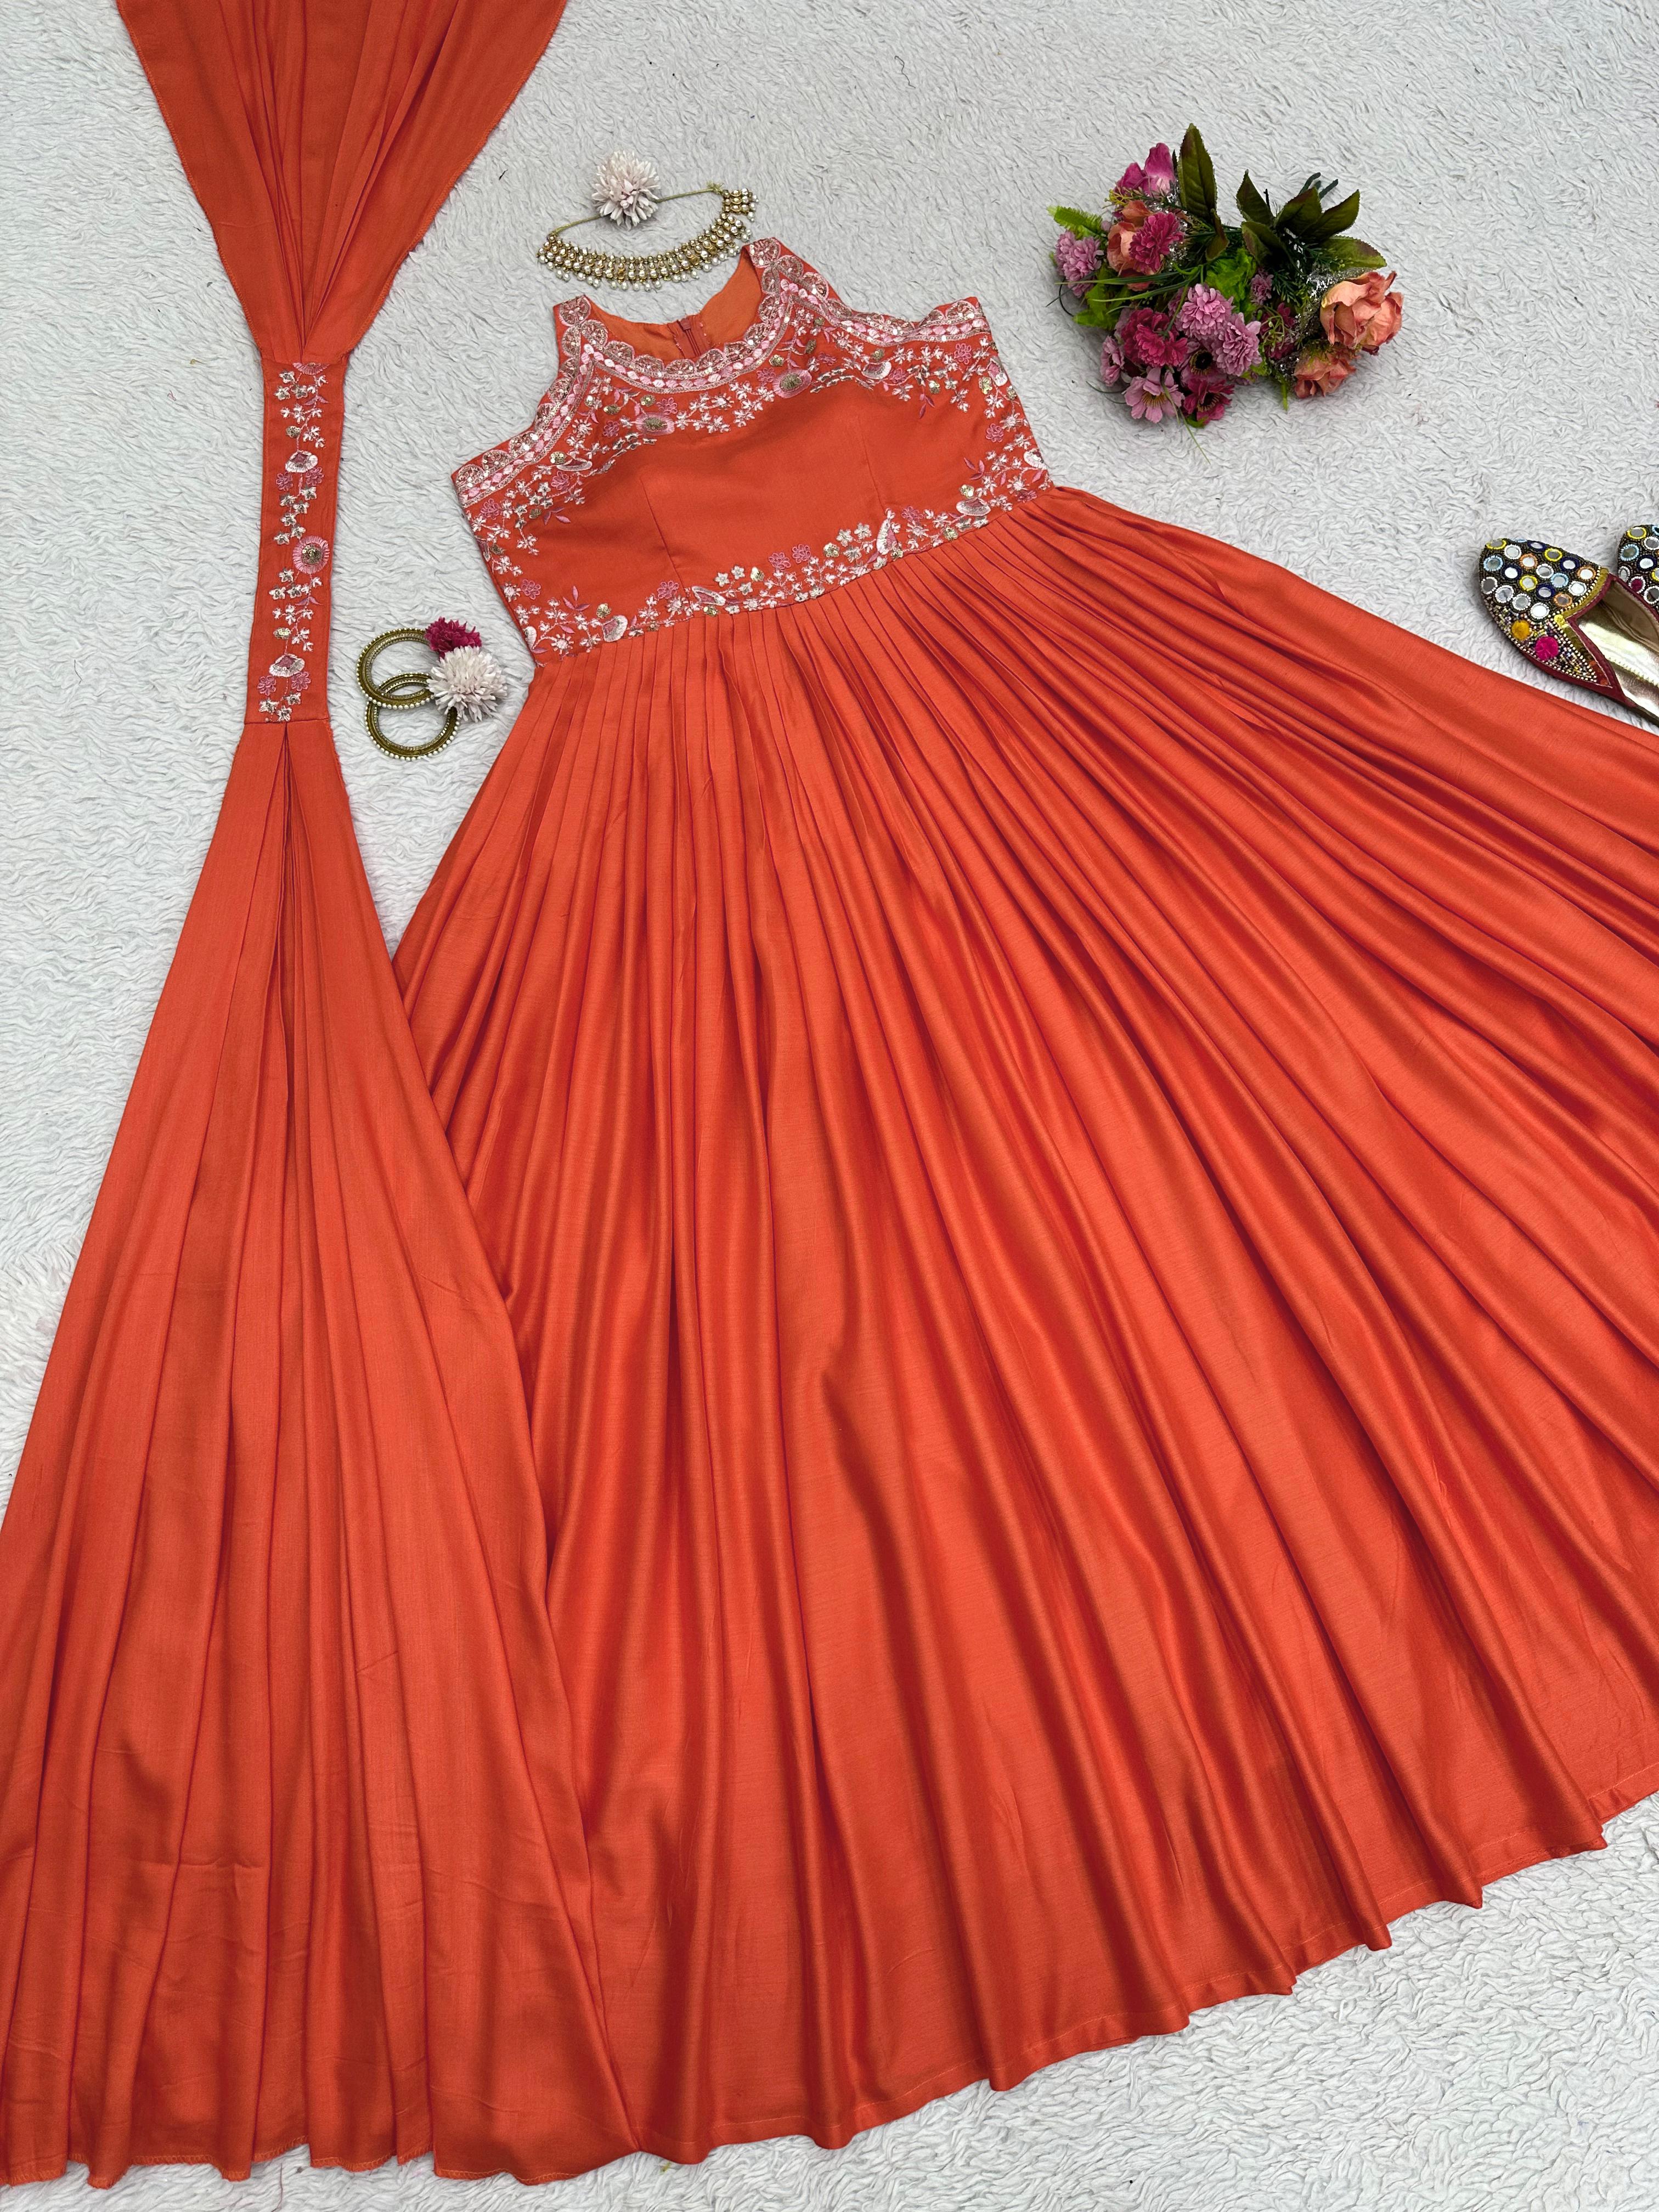 Outstanding Thread Work Orange Color Gown